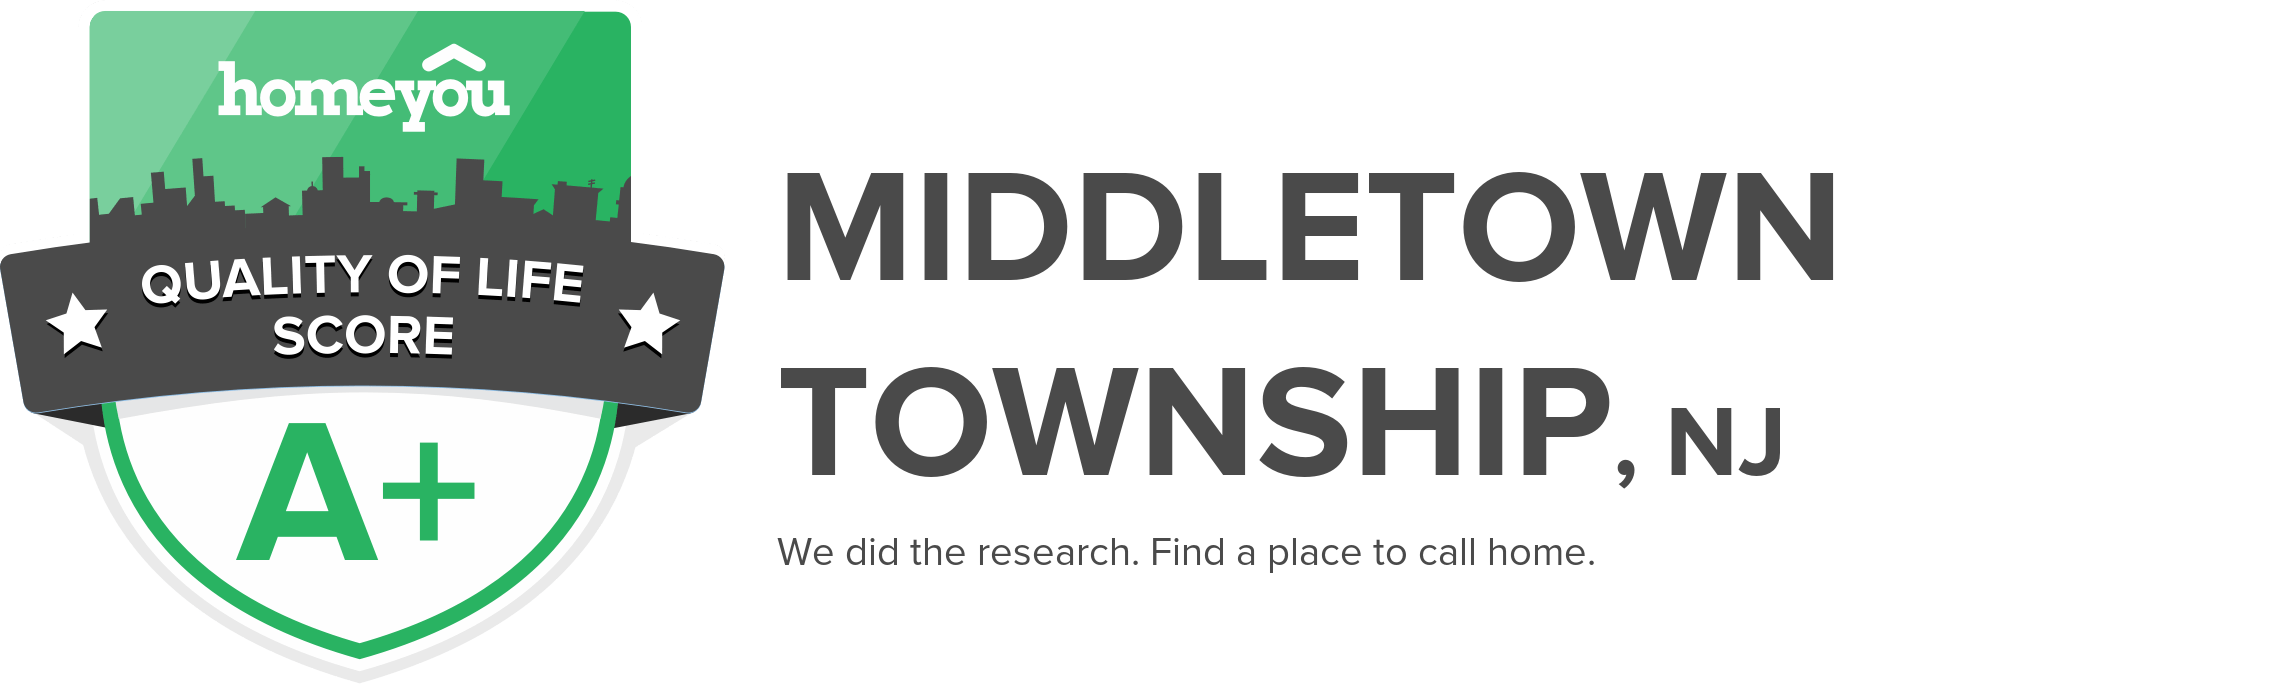 Middletown Township, NJ